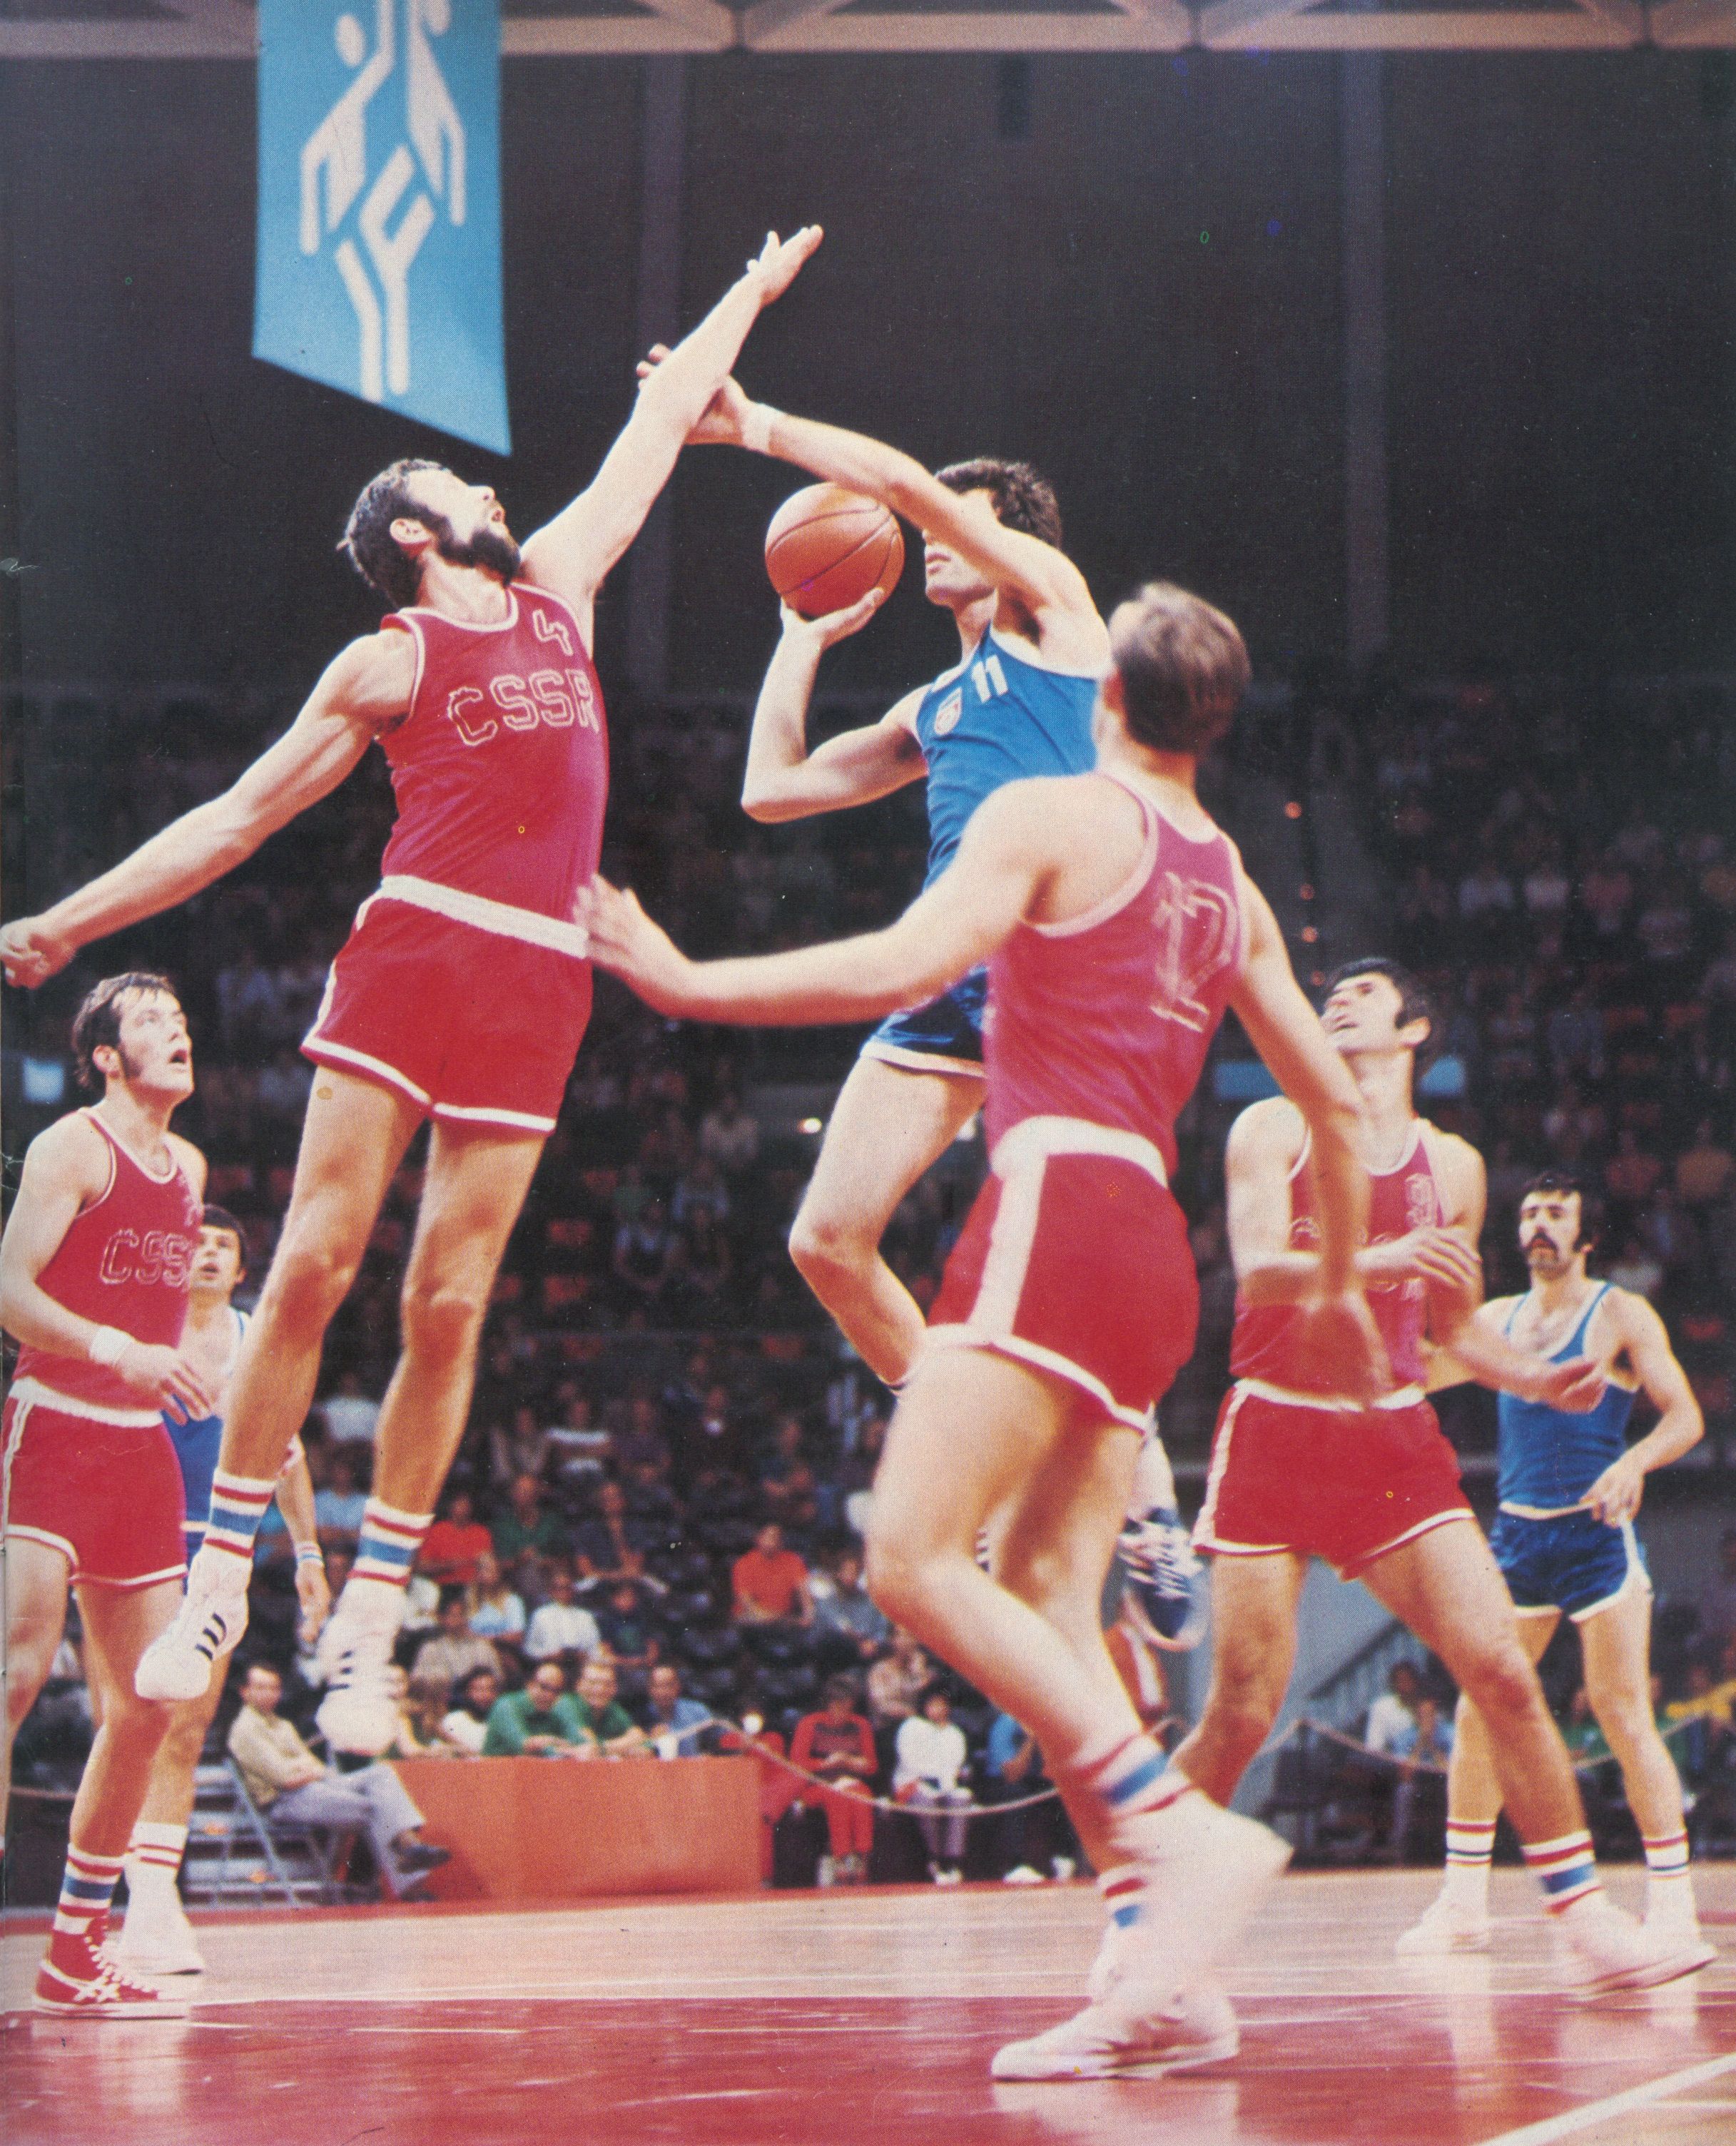 Игры 1972 баскетбол. Мюнхен 1972 баскетбол. Баскетбол Мюнхен 1972 СССР США. Олимпийские игры 1972 баскетбол.